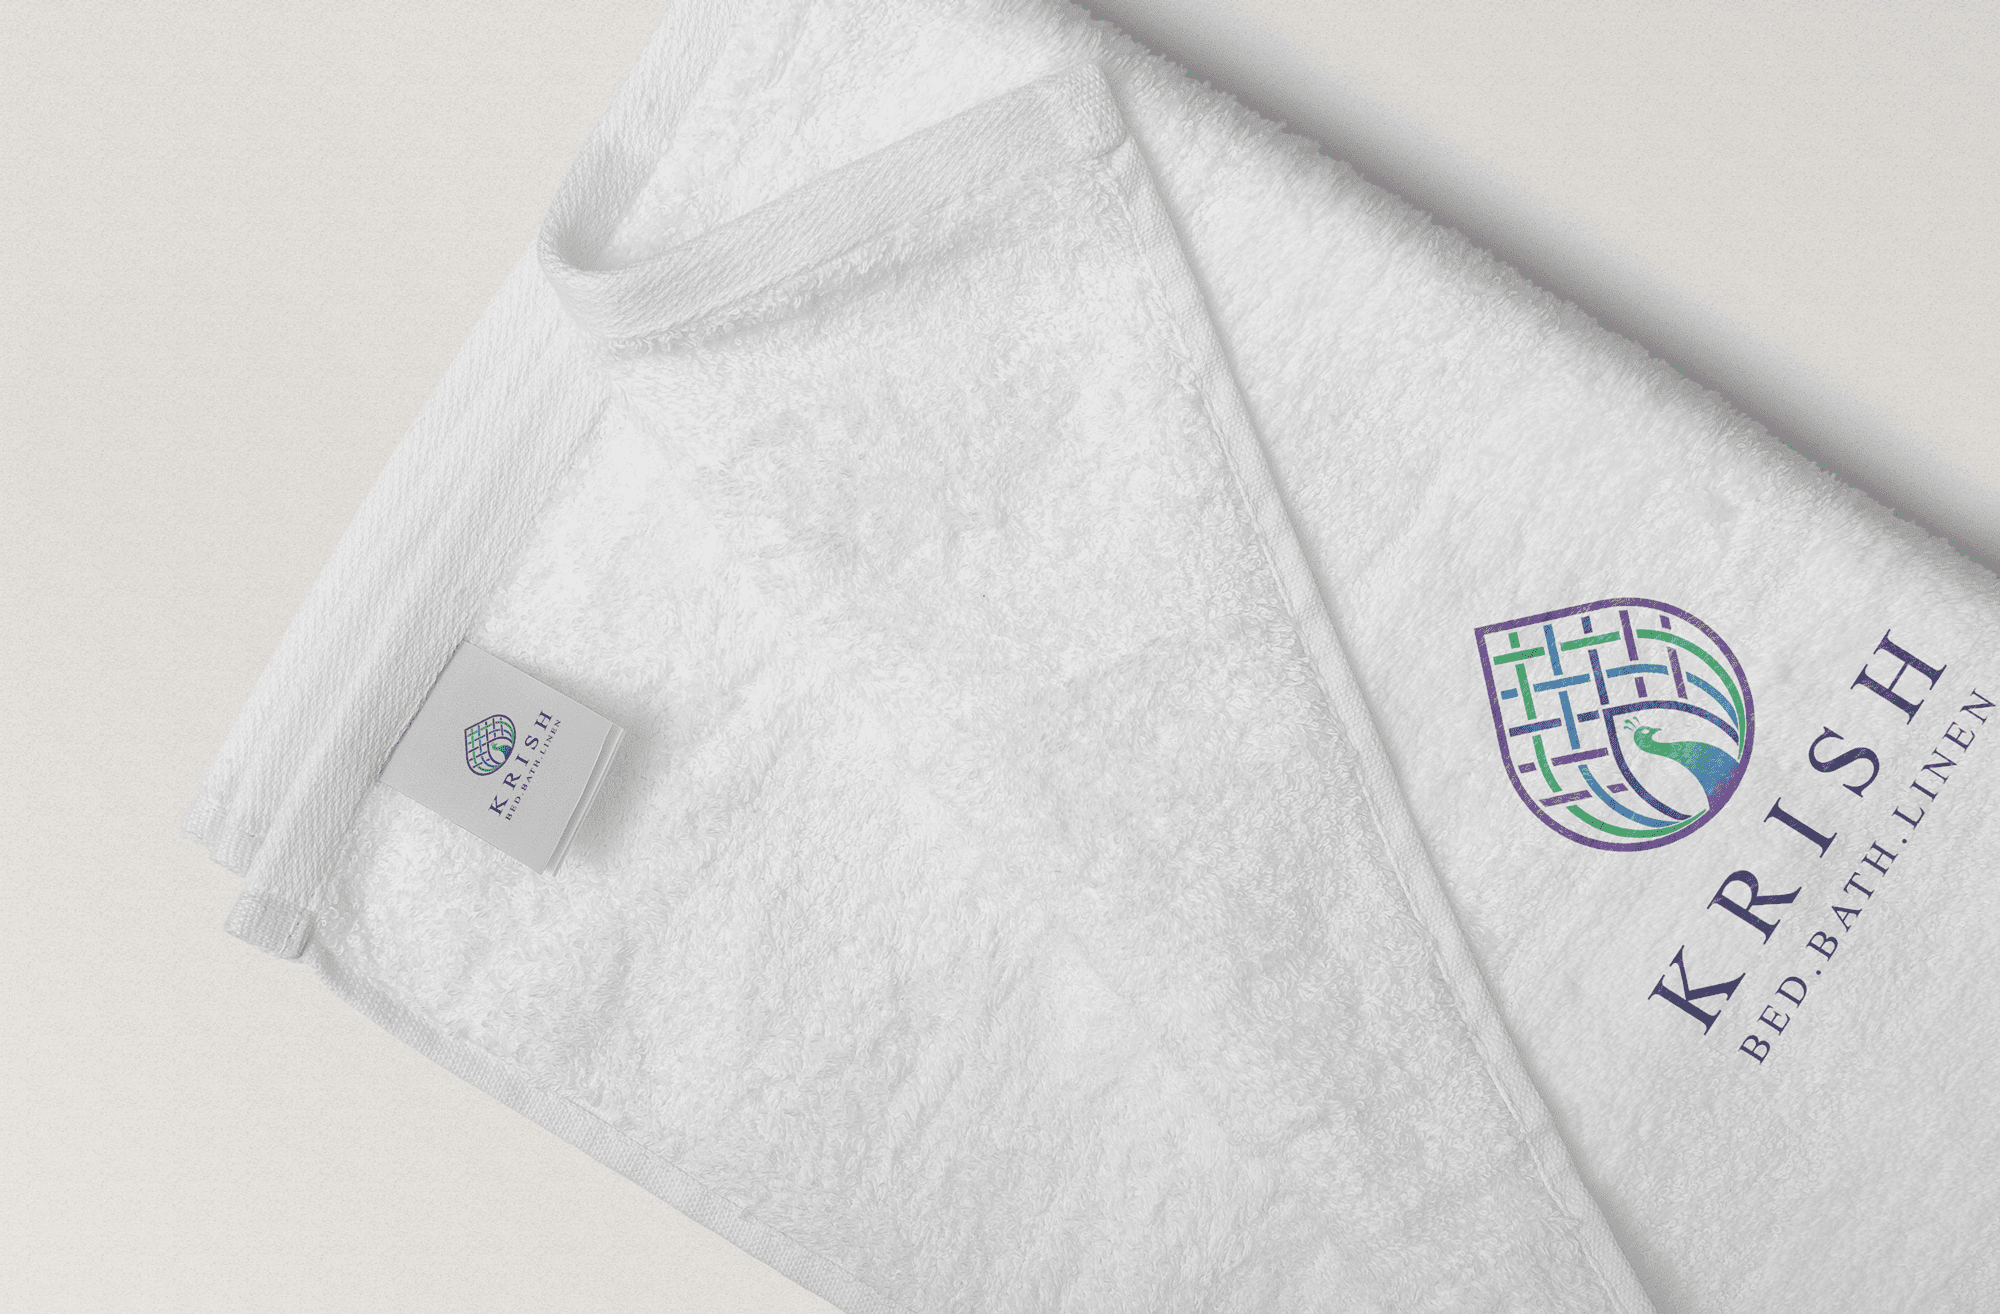 Krish Towel Print Graphic Design, Branding Packaging Design in tiruchengode by Creative Prints thecreativeprints